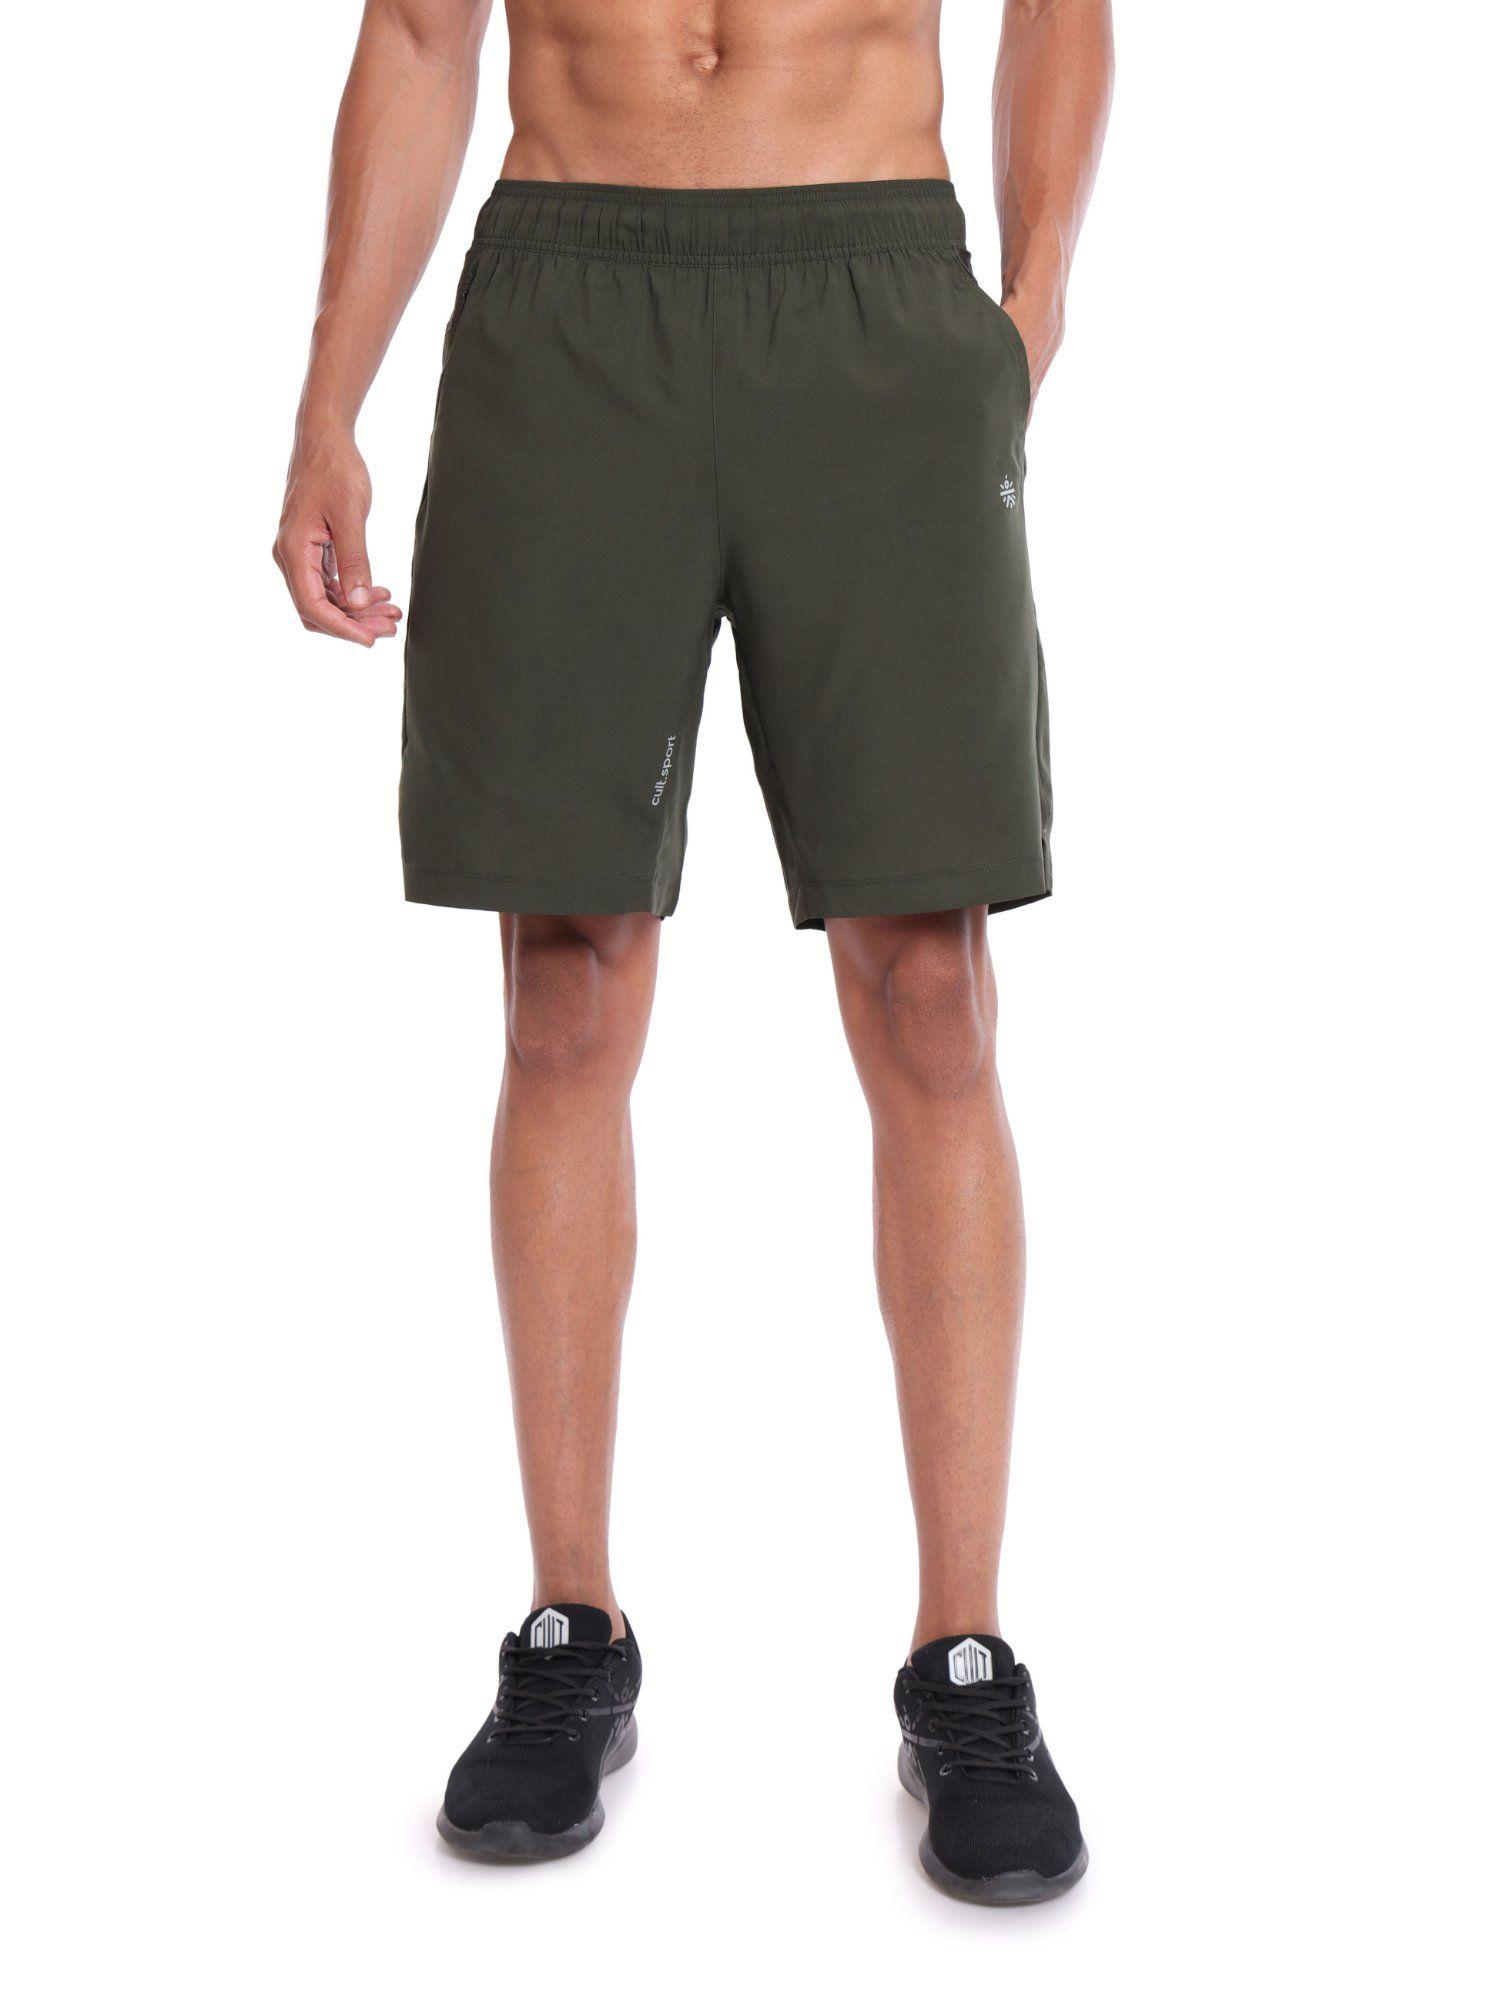 panelled running shorts